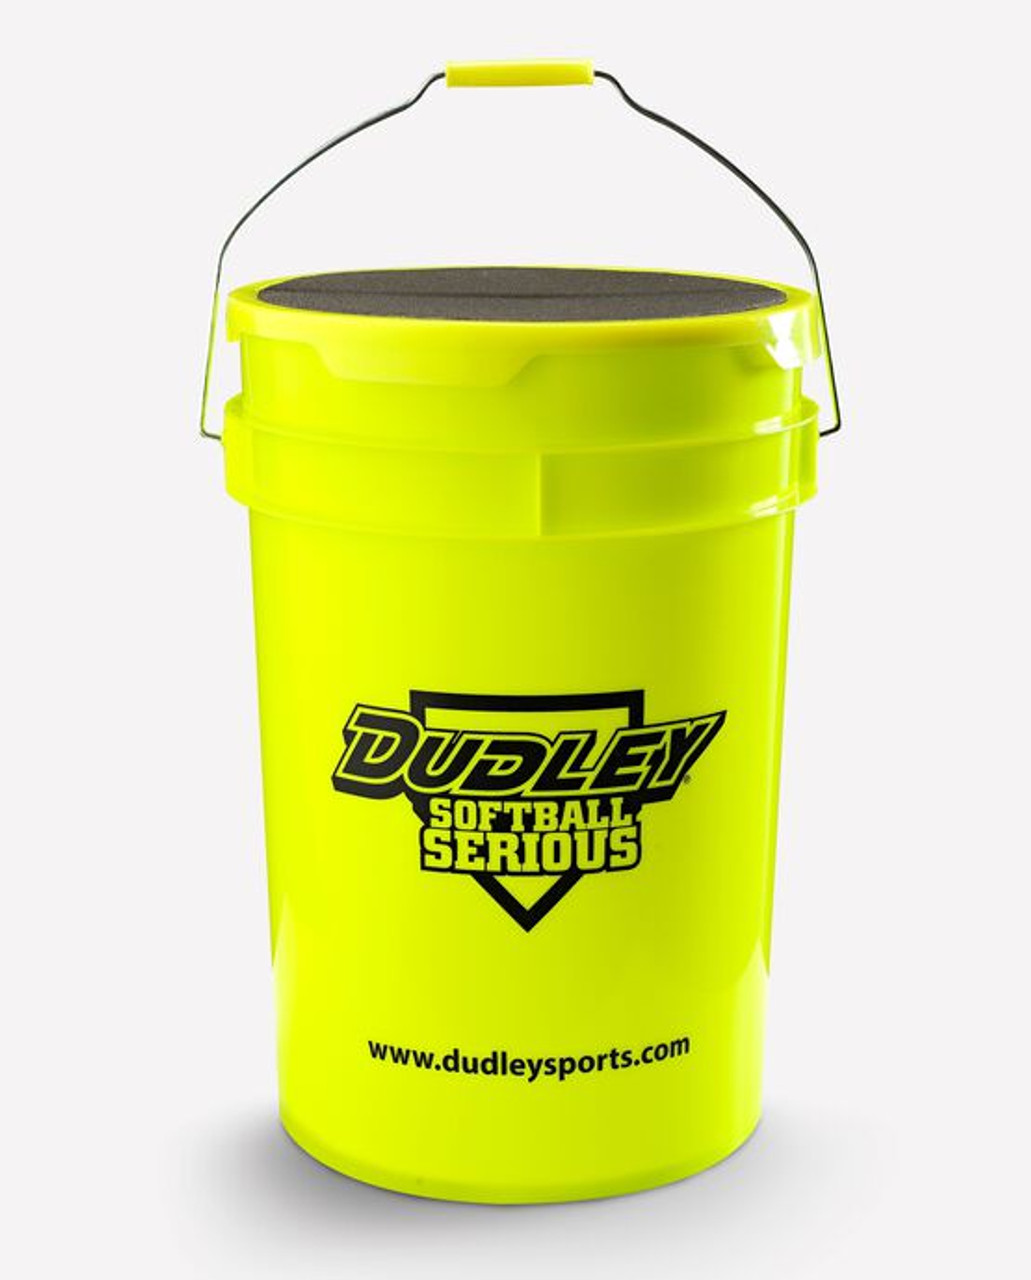 Dudley 12 NSA Thunder Heat Softball Bucket W/Doz